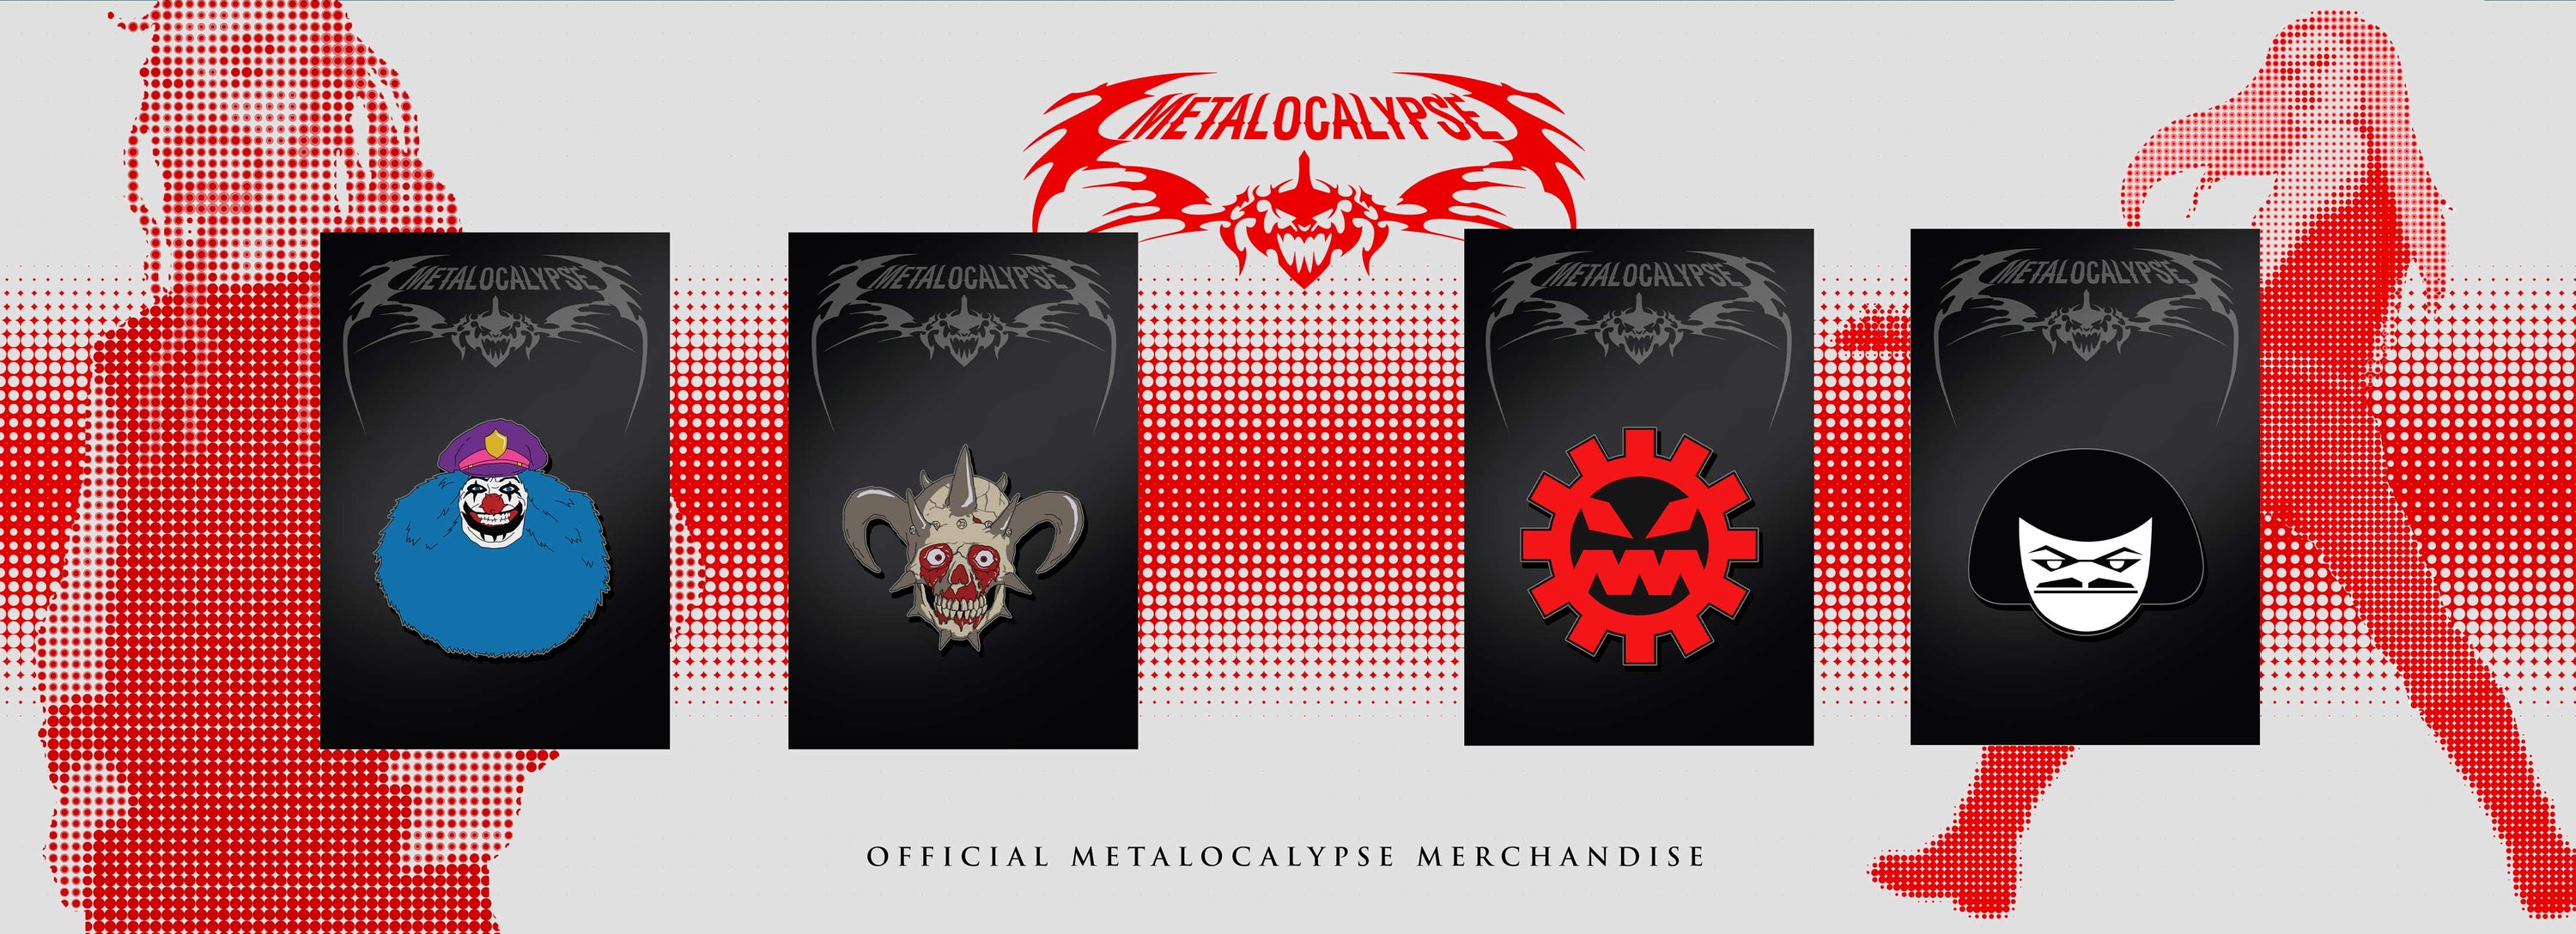 Official Metalocalypse Merchandise - Collectible Pins